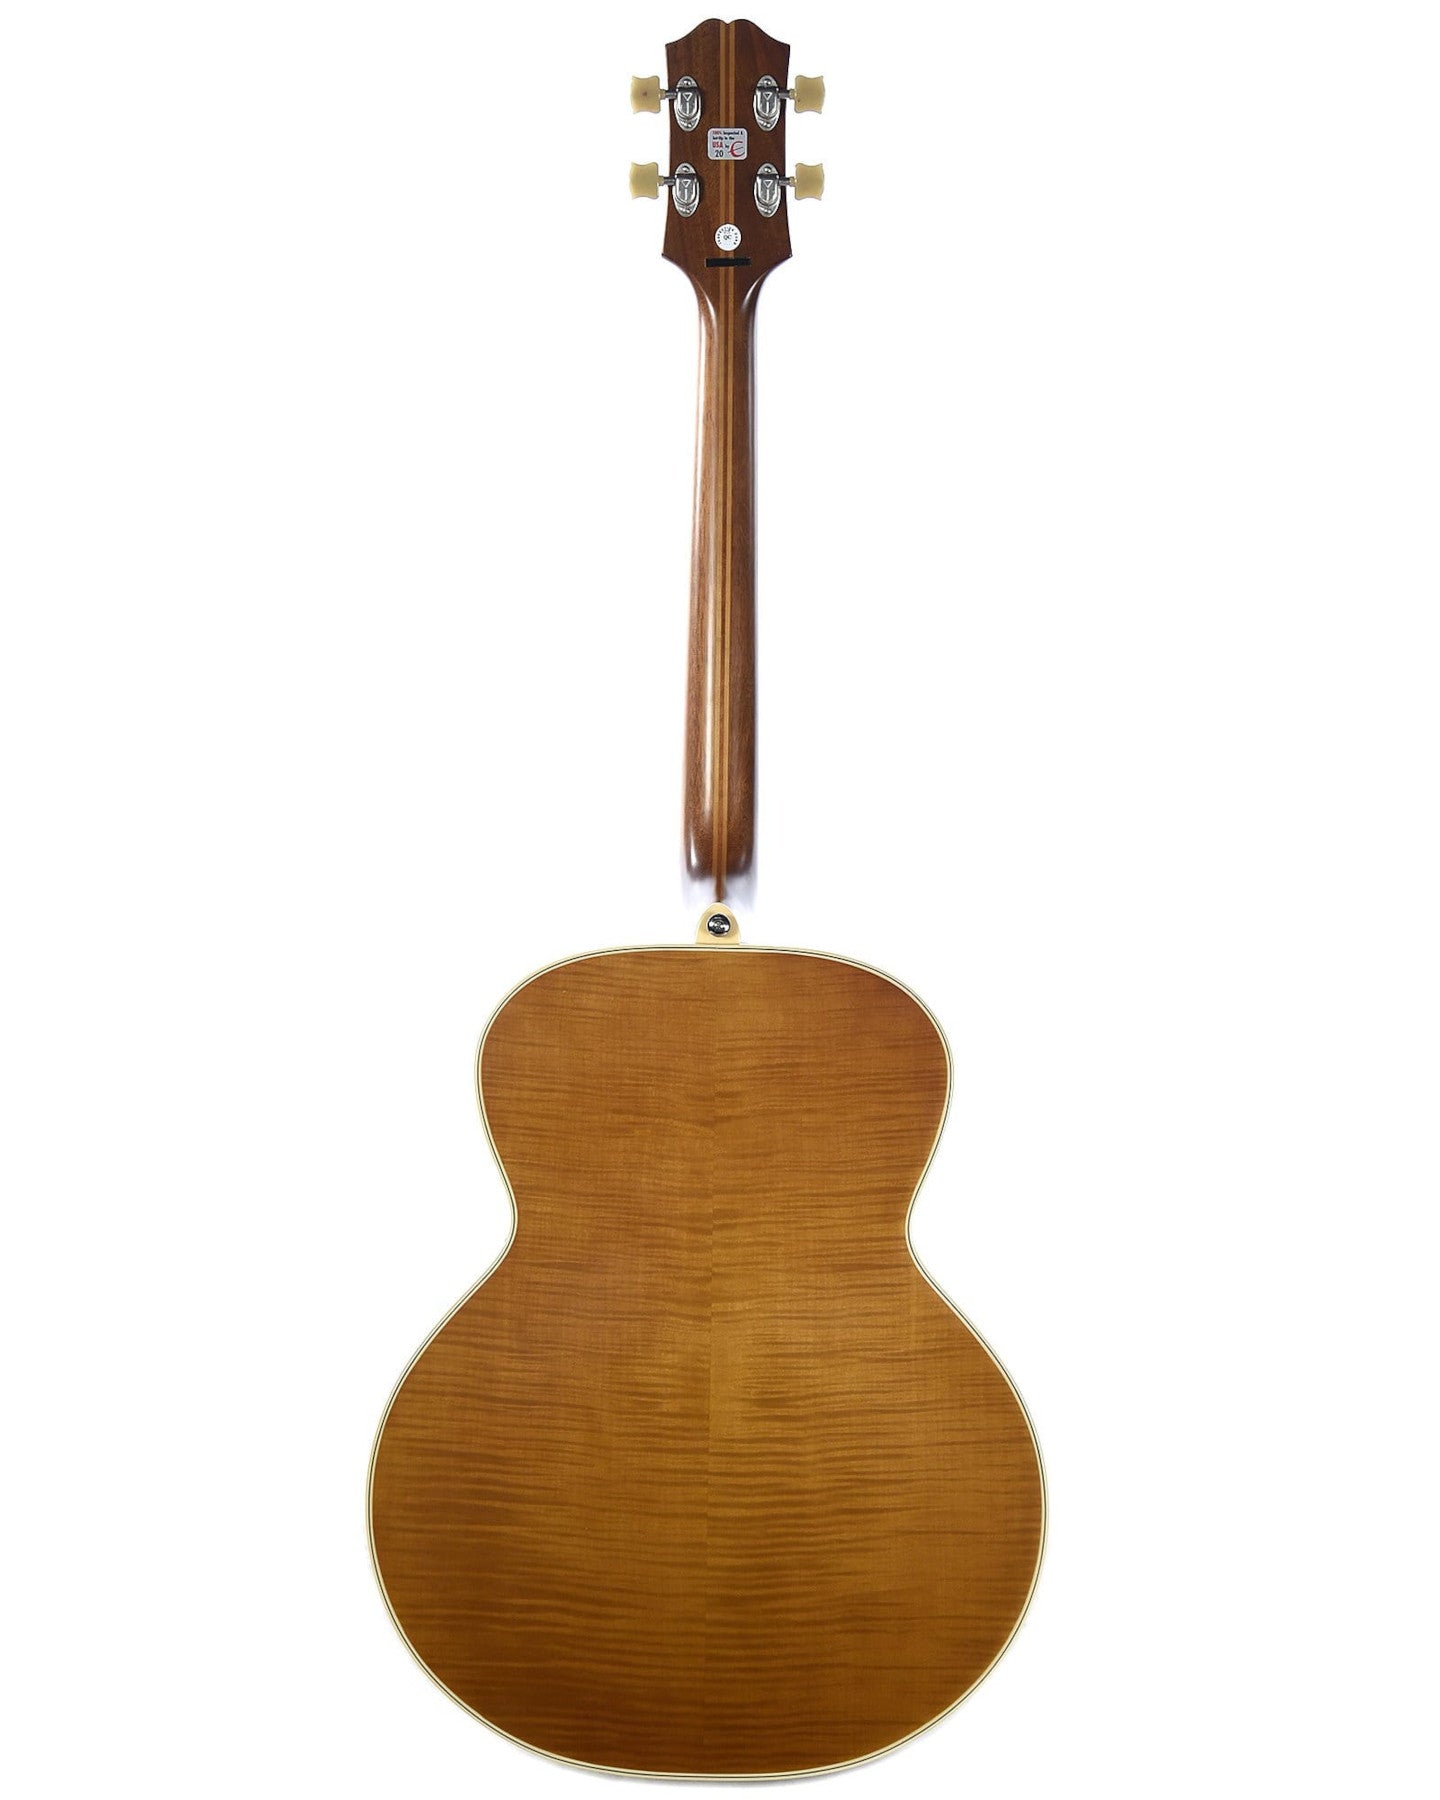 De Luxe Classic AcEI 4 String, Vintage Natural